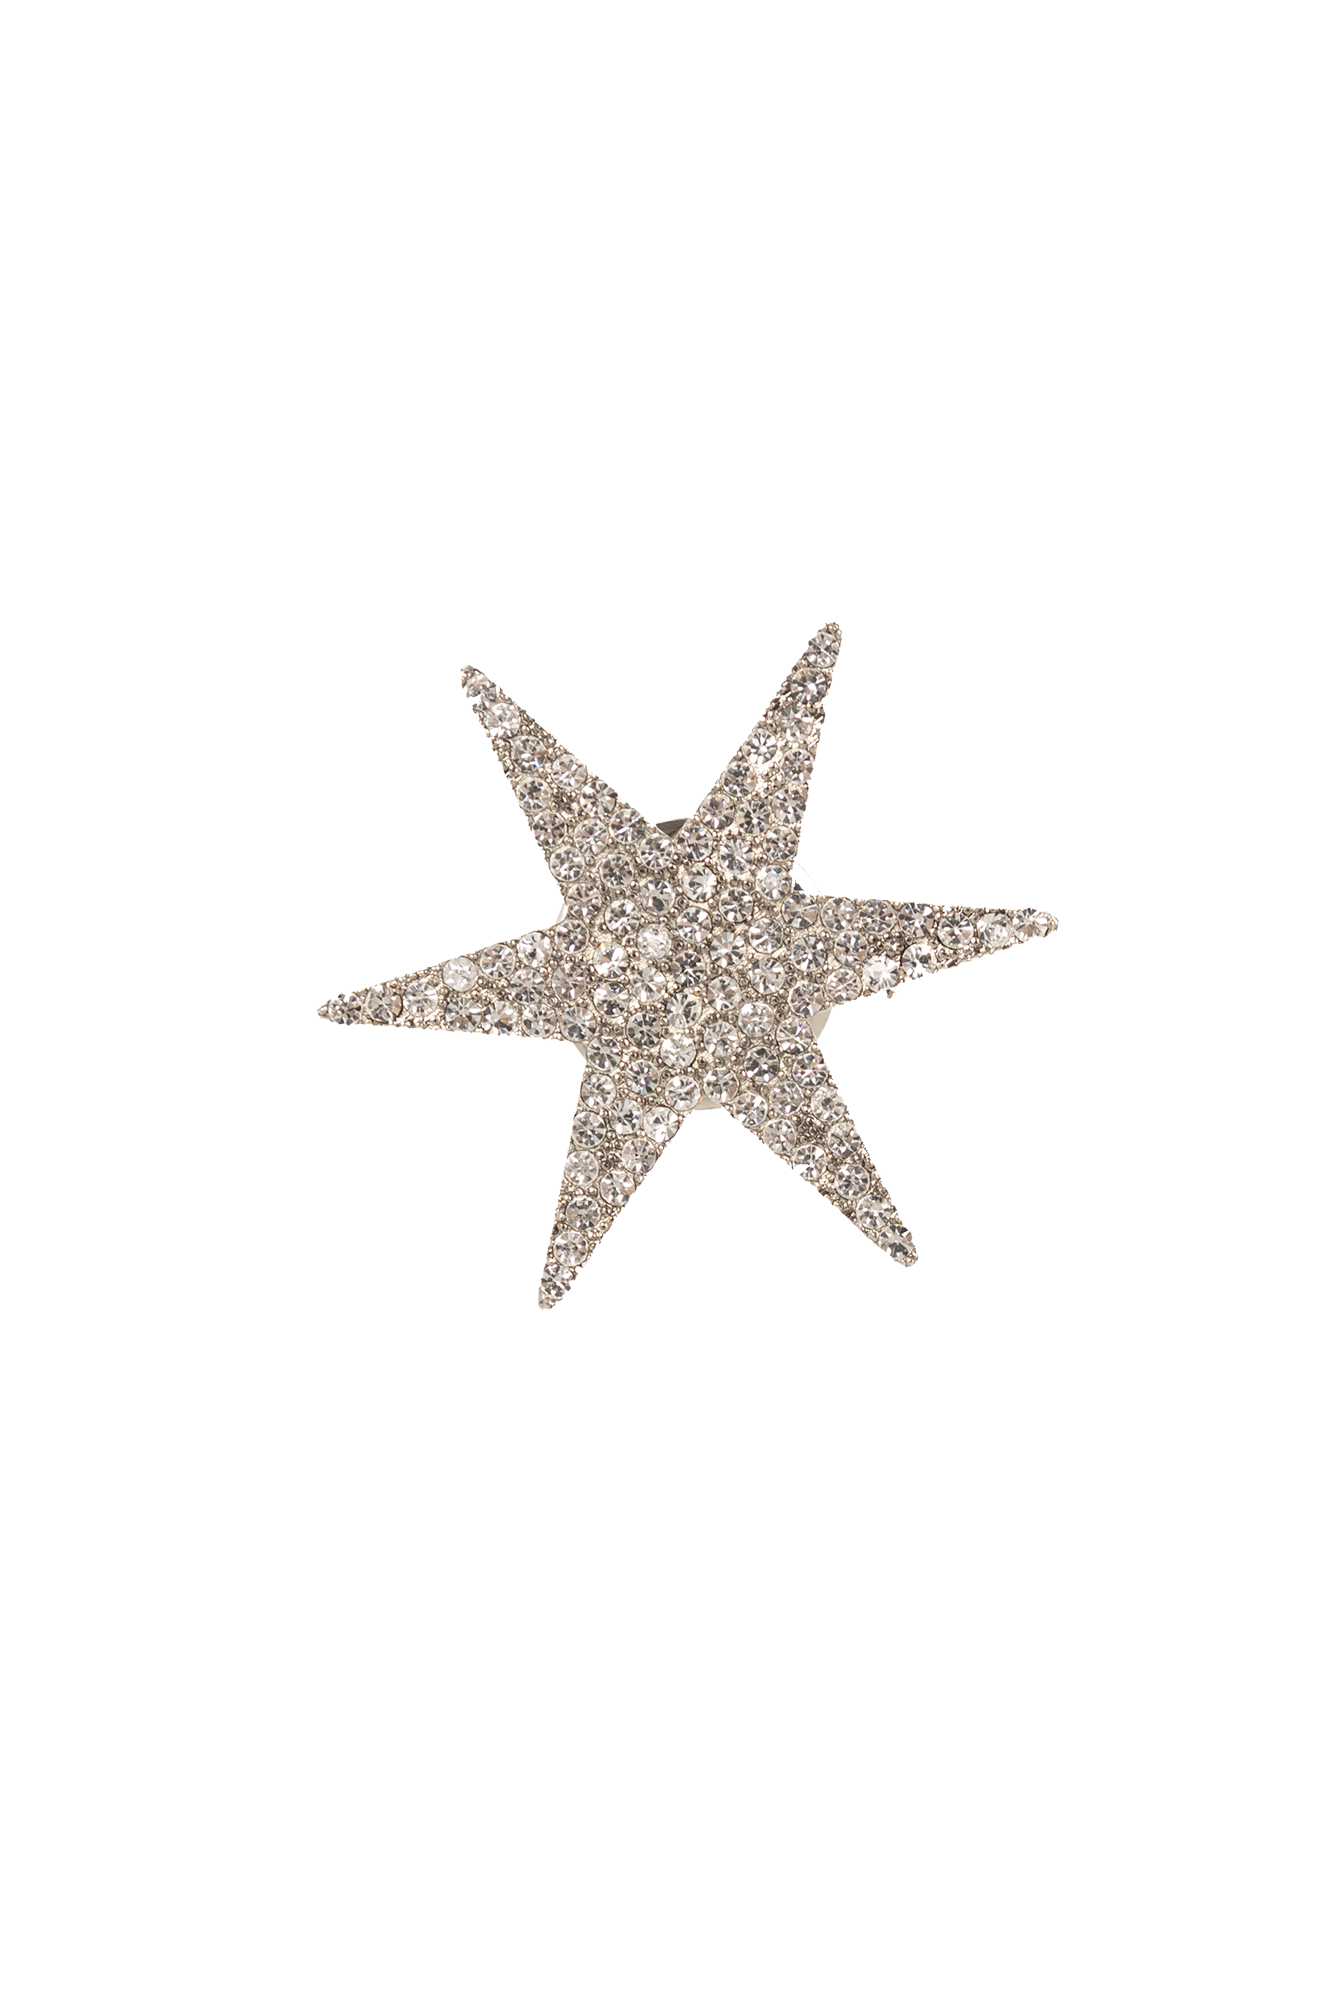 Moschino Star-shaped pin